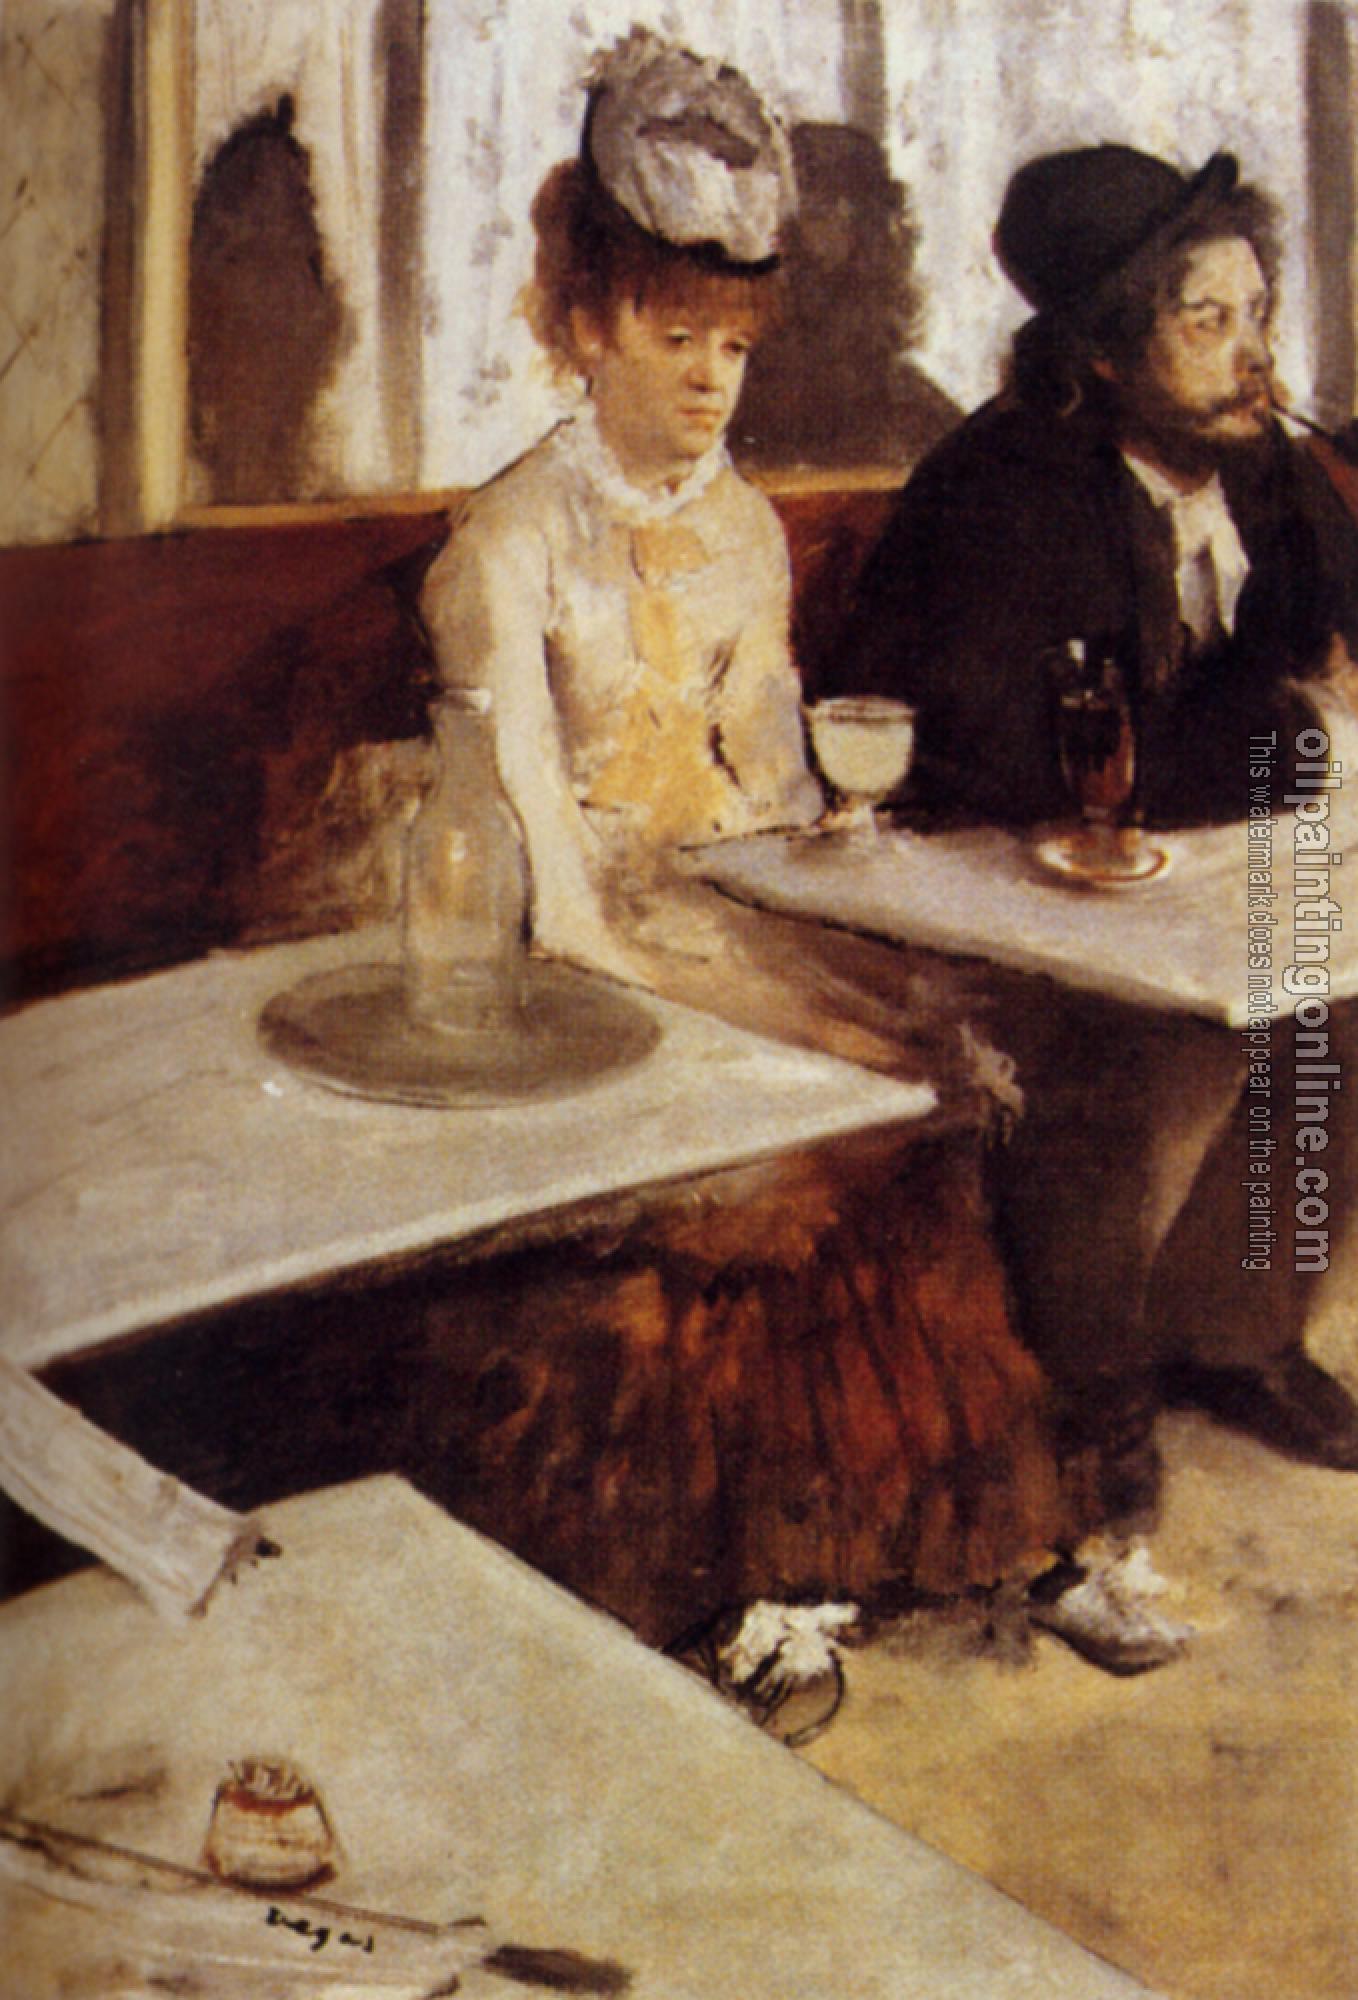 Degas, Edgar - The Absinthe Drinker